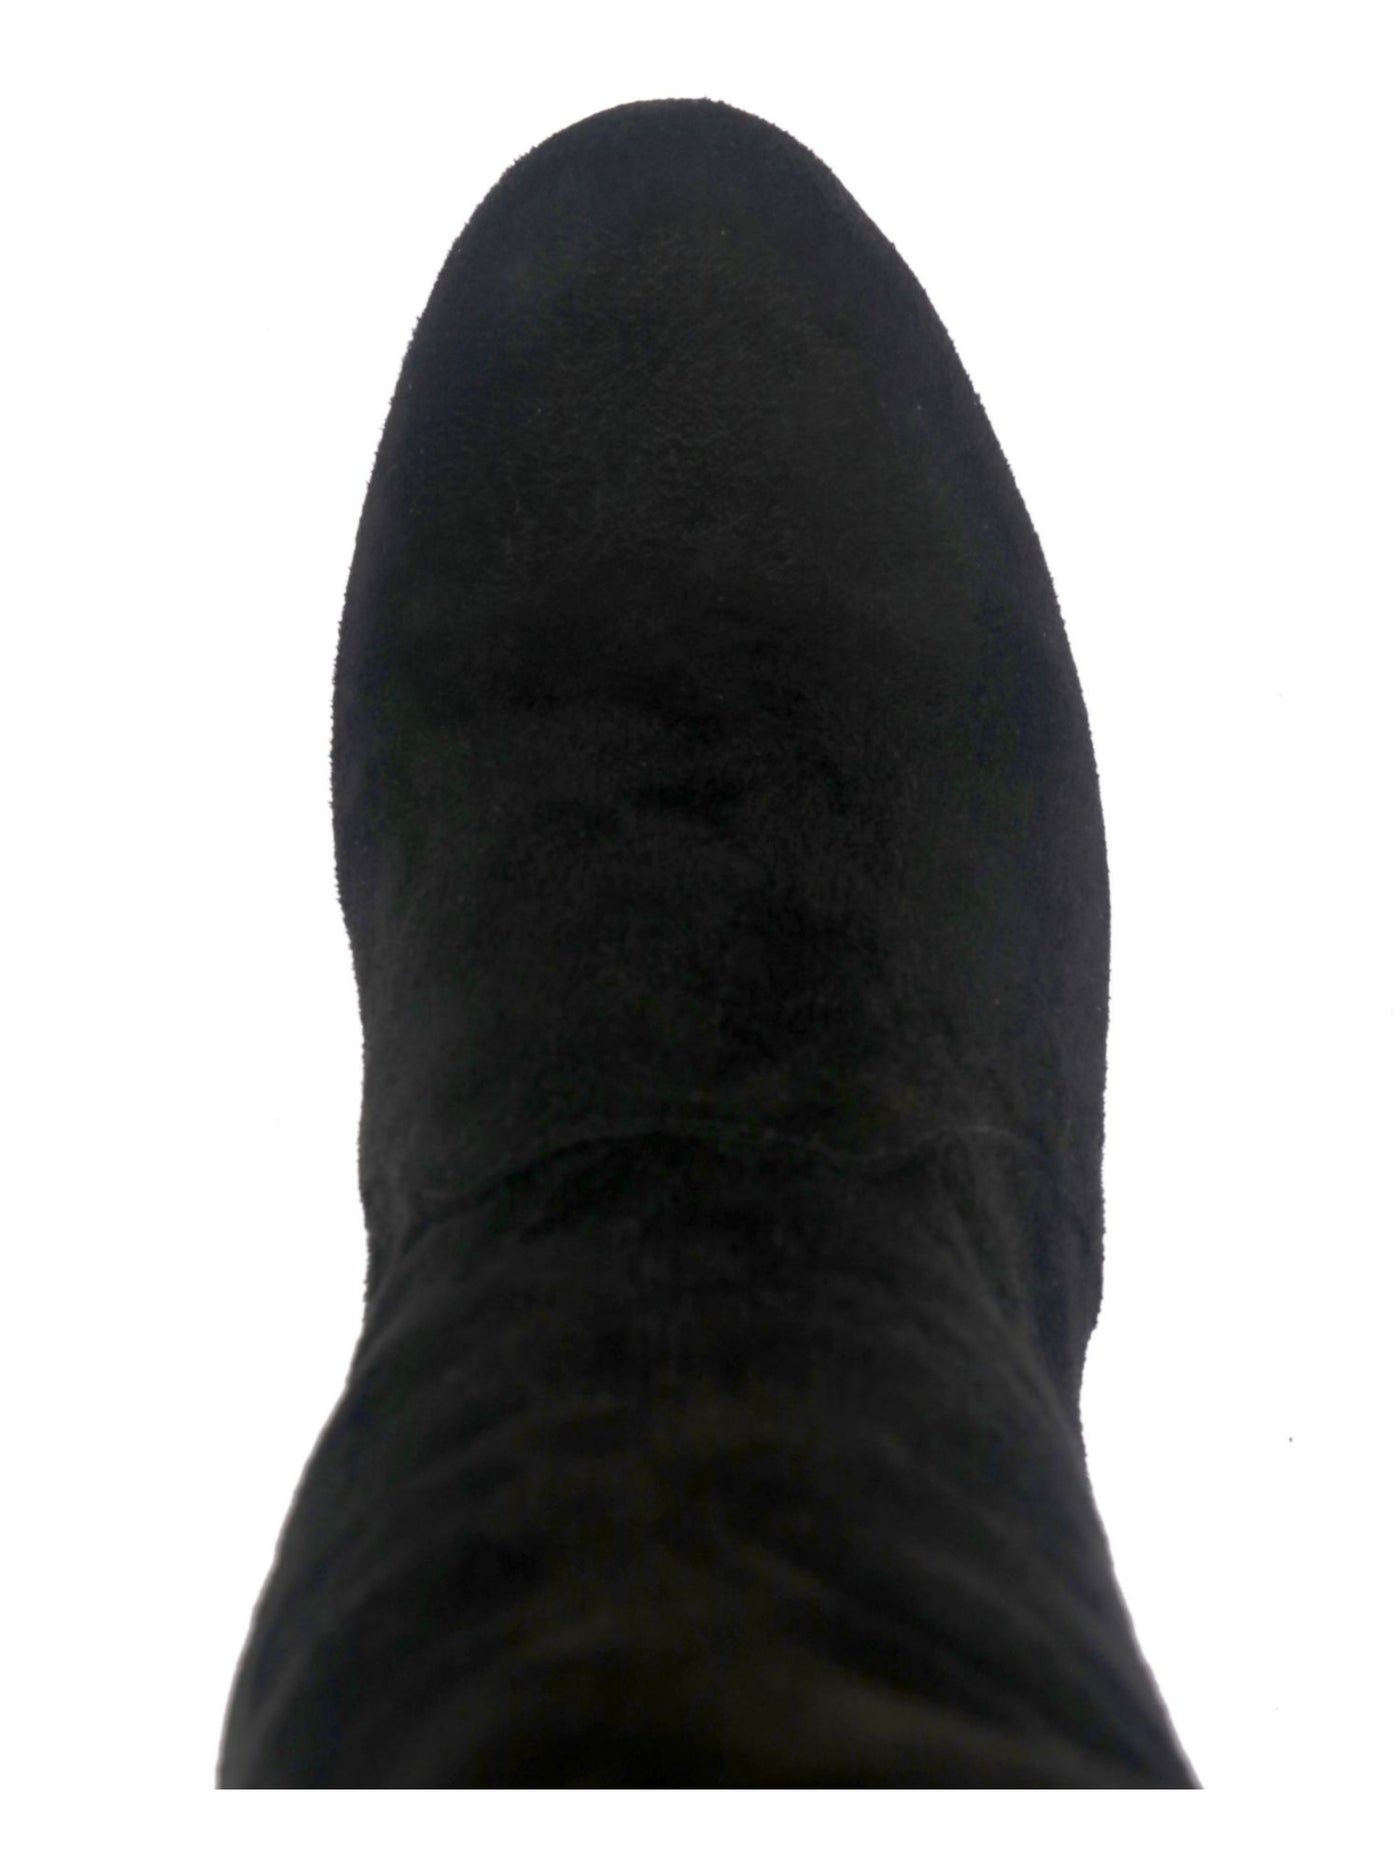 THALIA SODI Womens Black 1" Platform Cushioned Clarissa Round Toe Stiletto Zip-Up Dress Boots 9.5 M